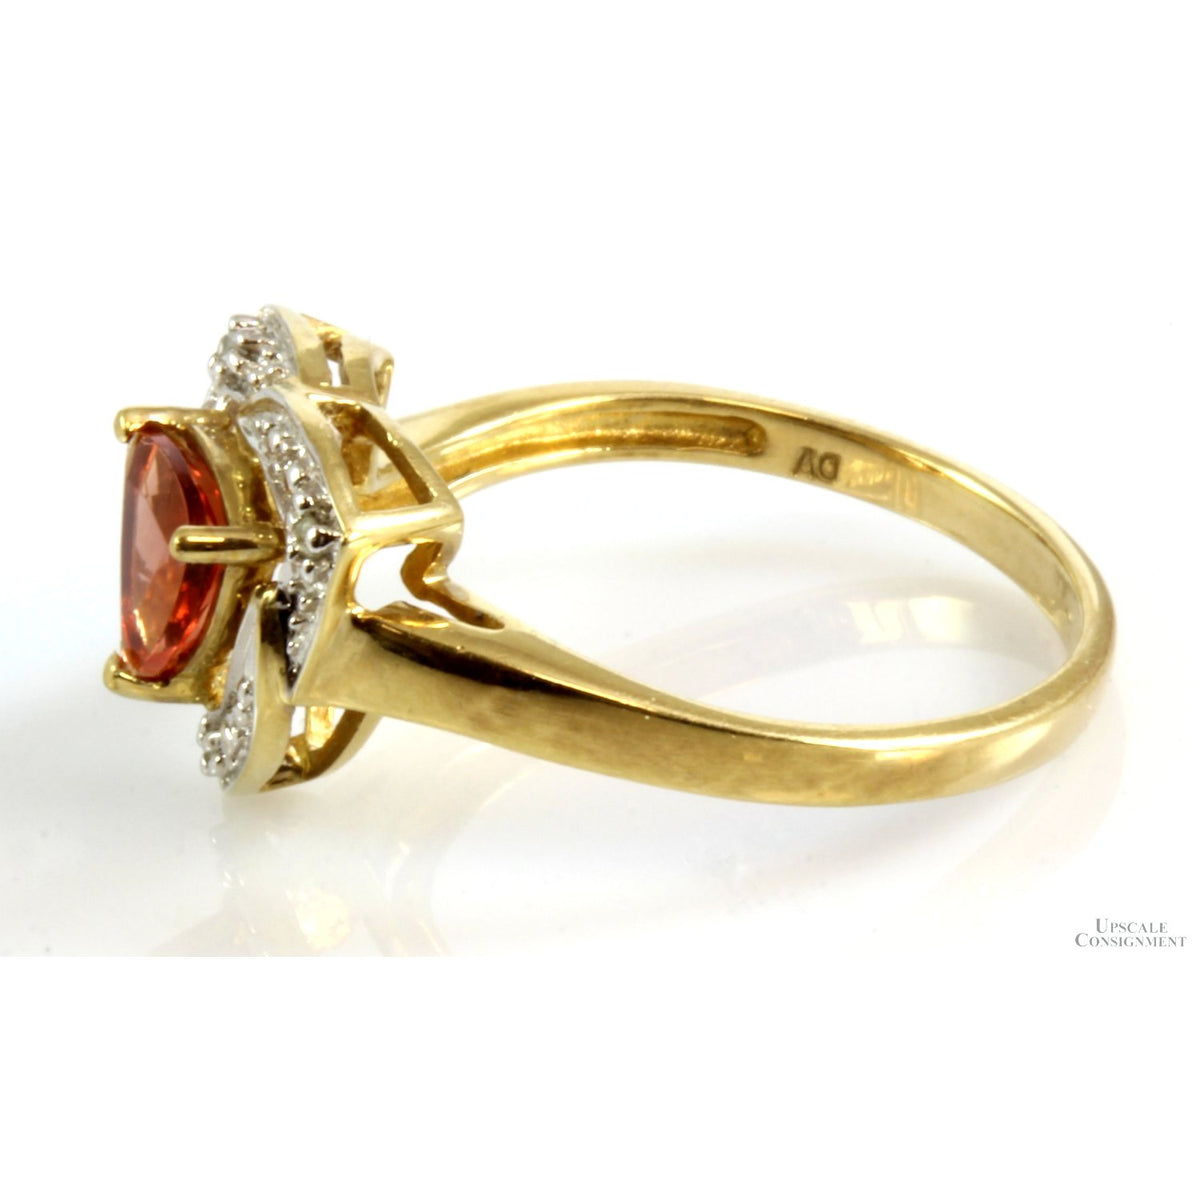 .67ct Trillion Shaped Orange-Red Labradorite & Diamond Ring